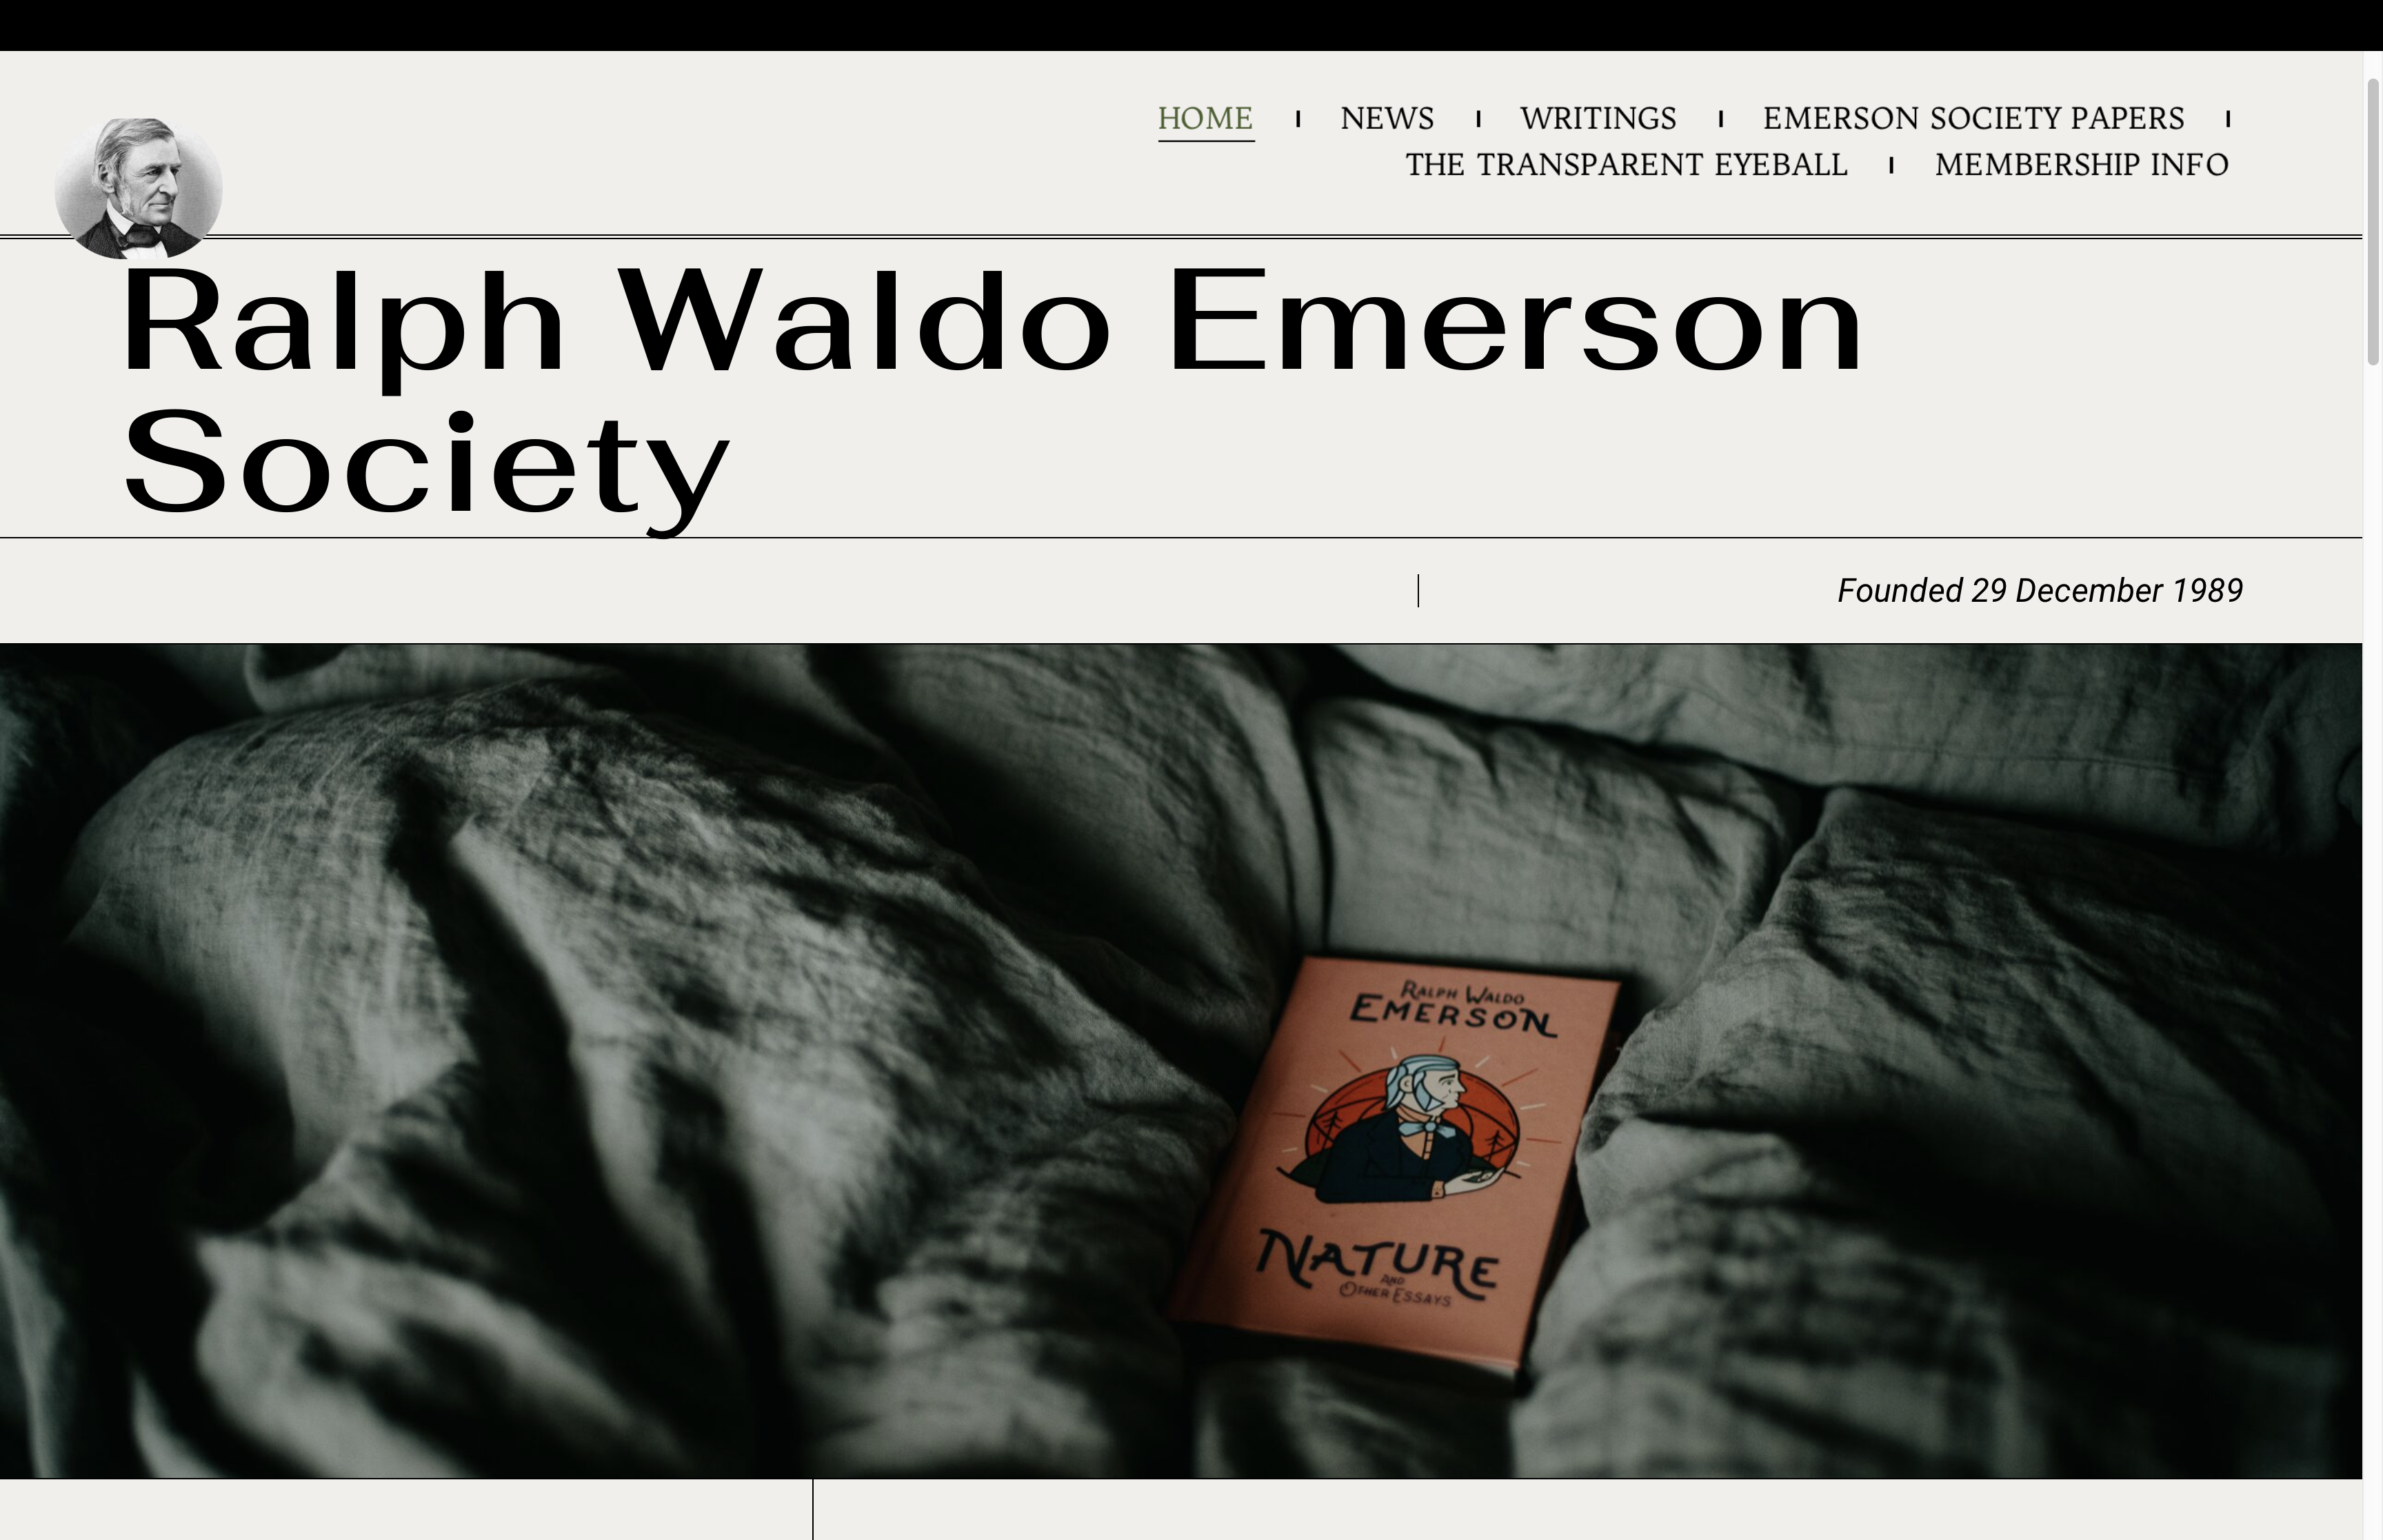 Emerson Society